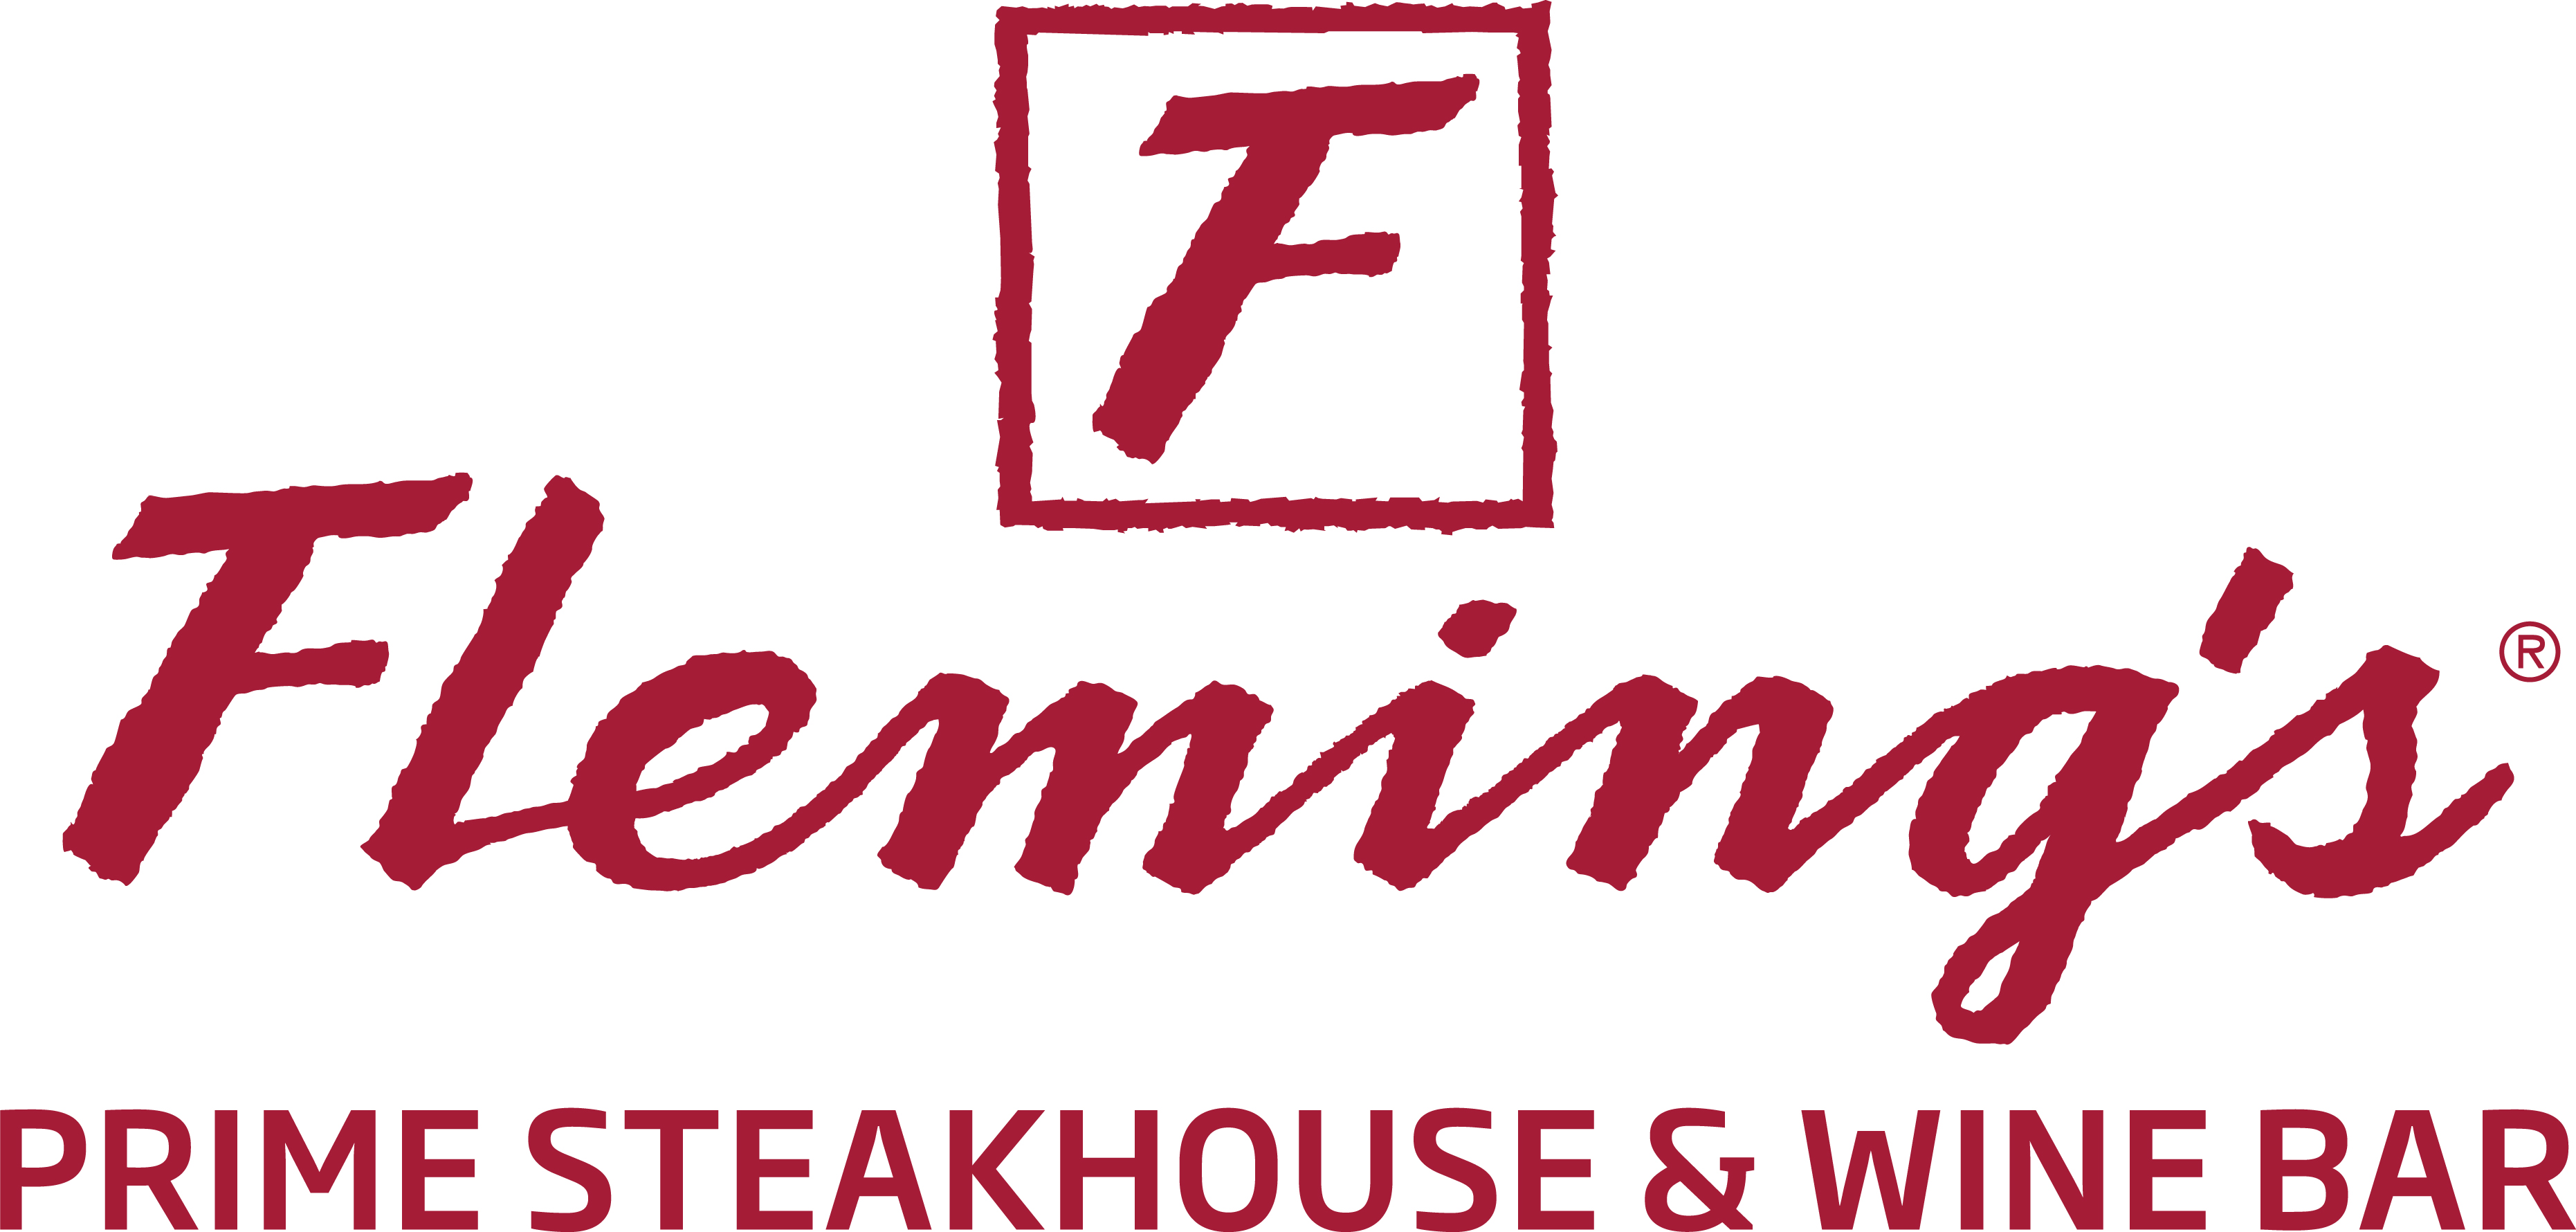 Image result for fleming's steakhouse logo